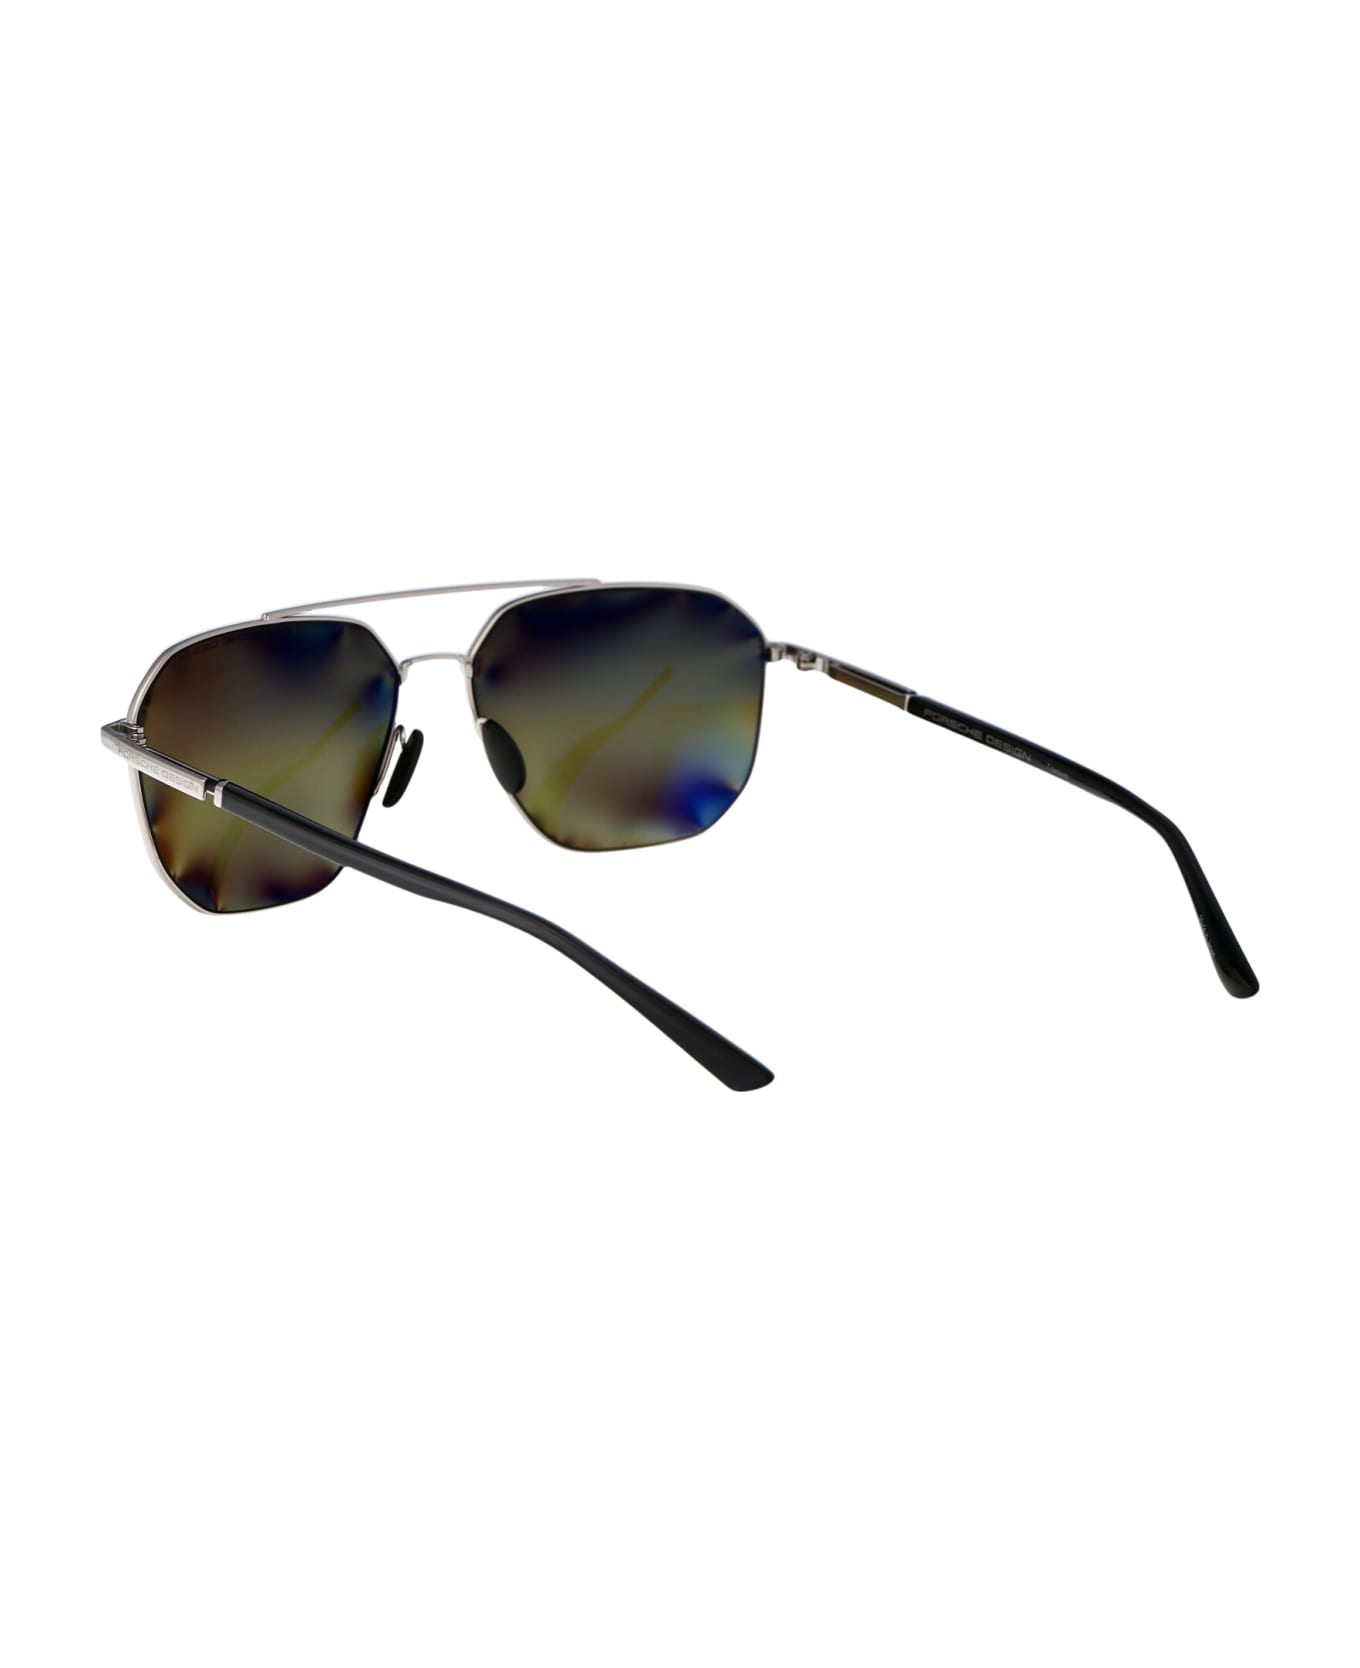 Porsche Design P8967 Sunglasses - B417 PALLADIUM GREY サングラス